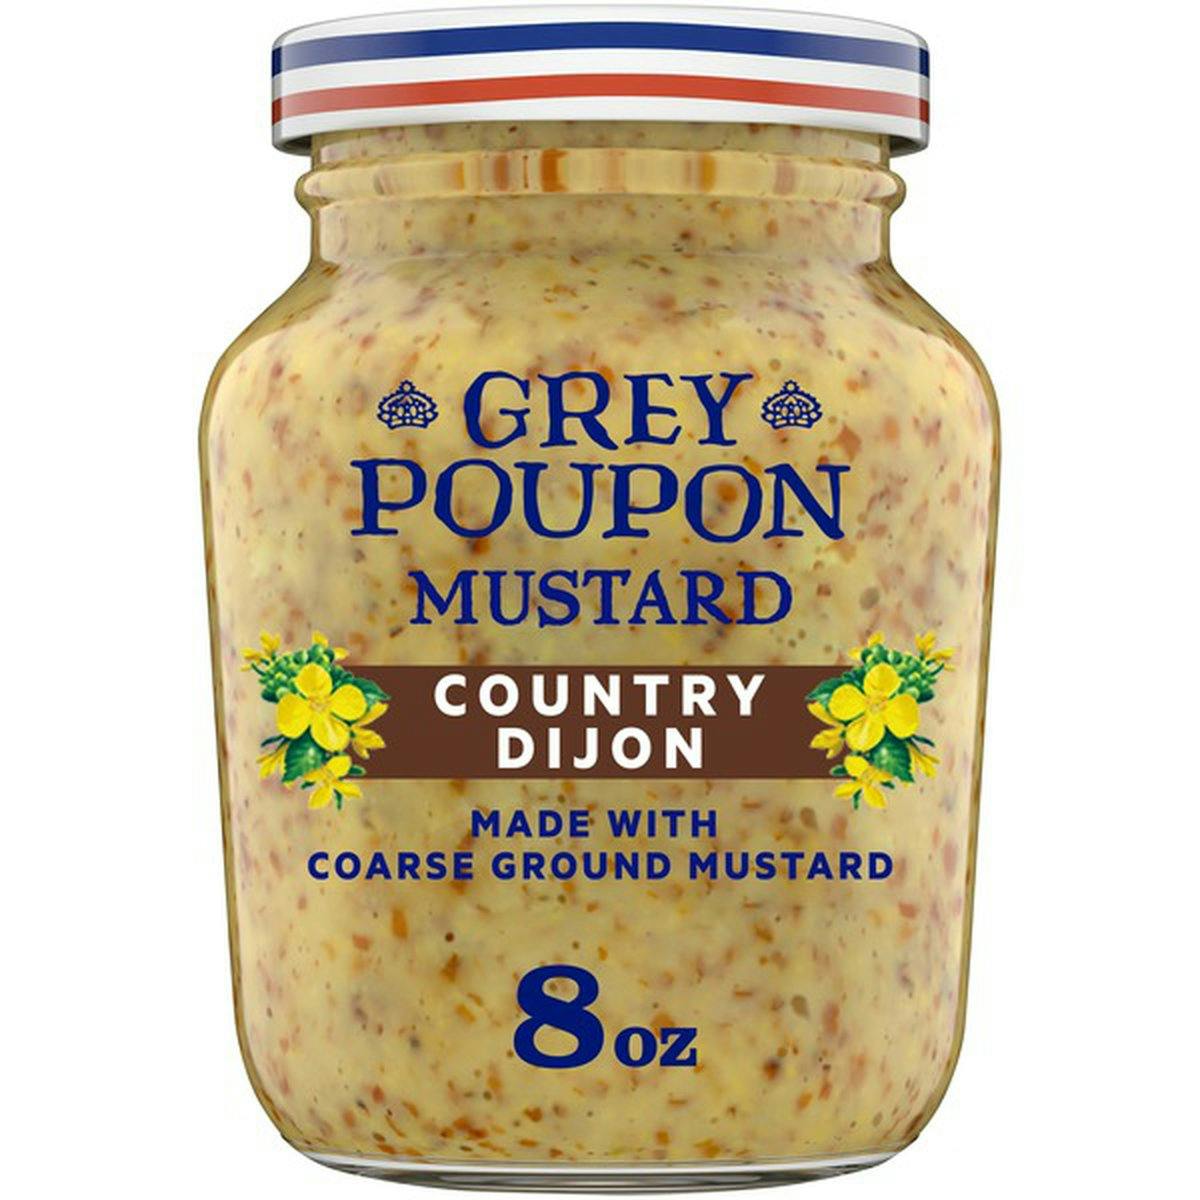 dijon mustard